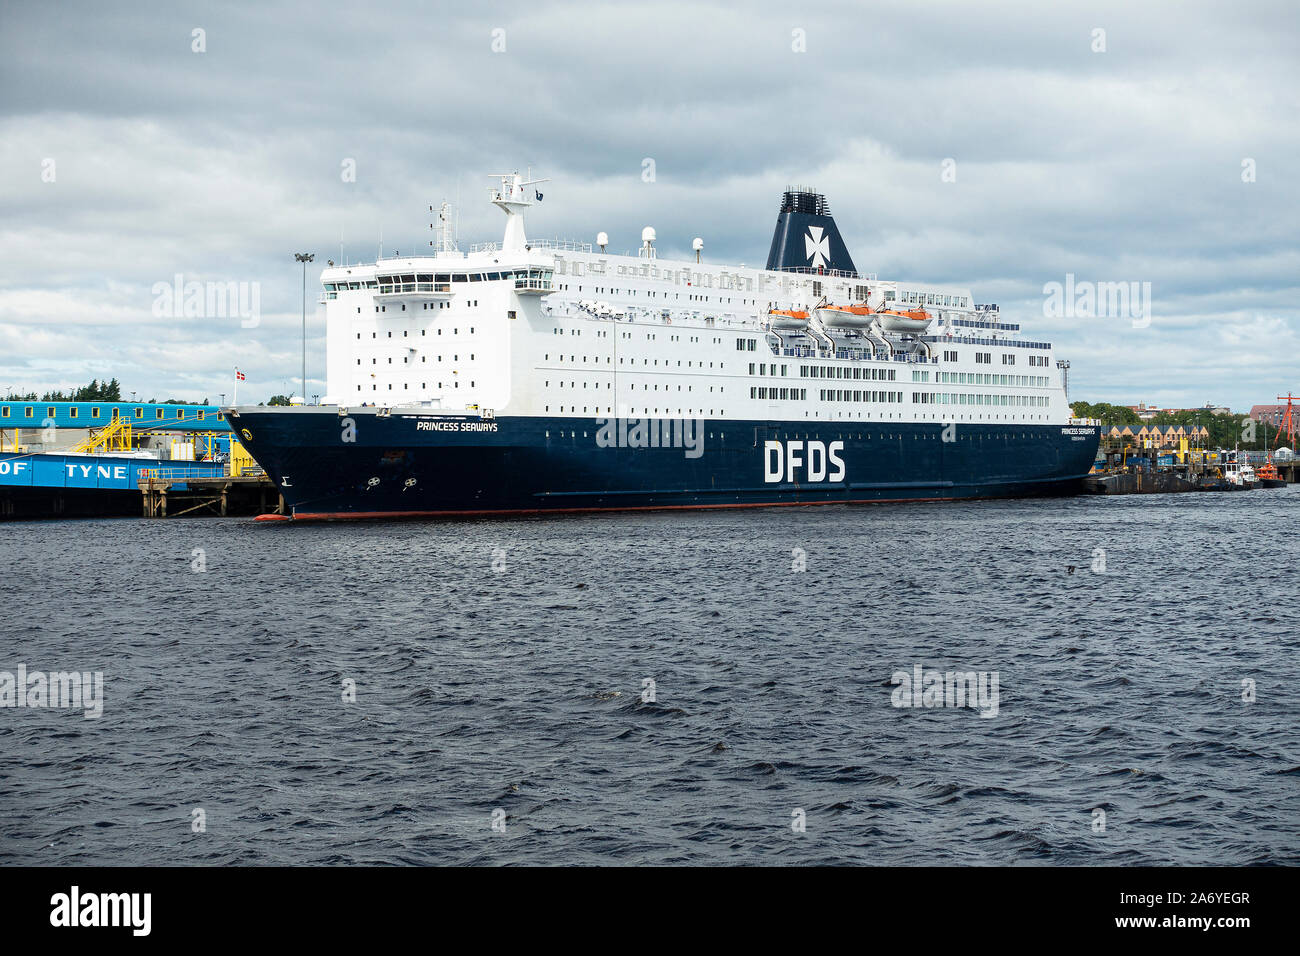 Die DFDS Seaways Car and Passenger Ferry Princess Seaways dockte am internationalen Passagierterminal Port of Tyne North Shields Tyne & Wear UK an Stockfoto